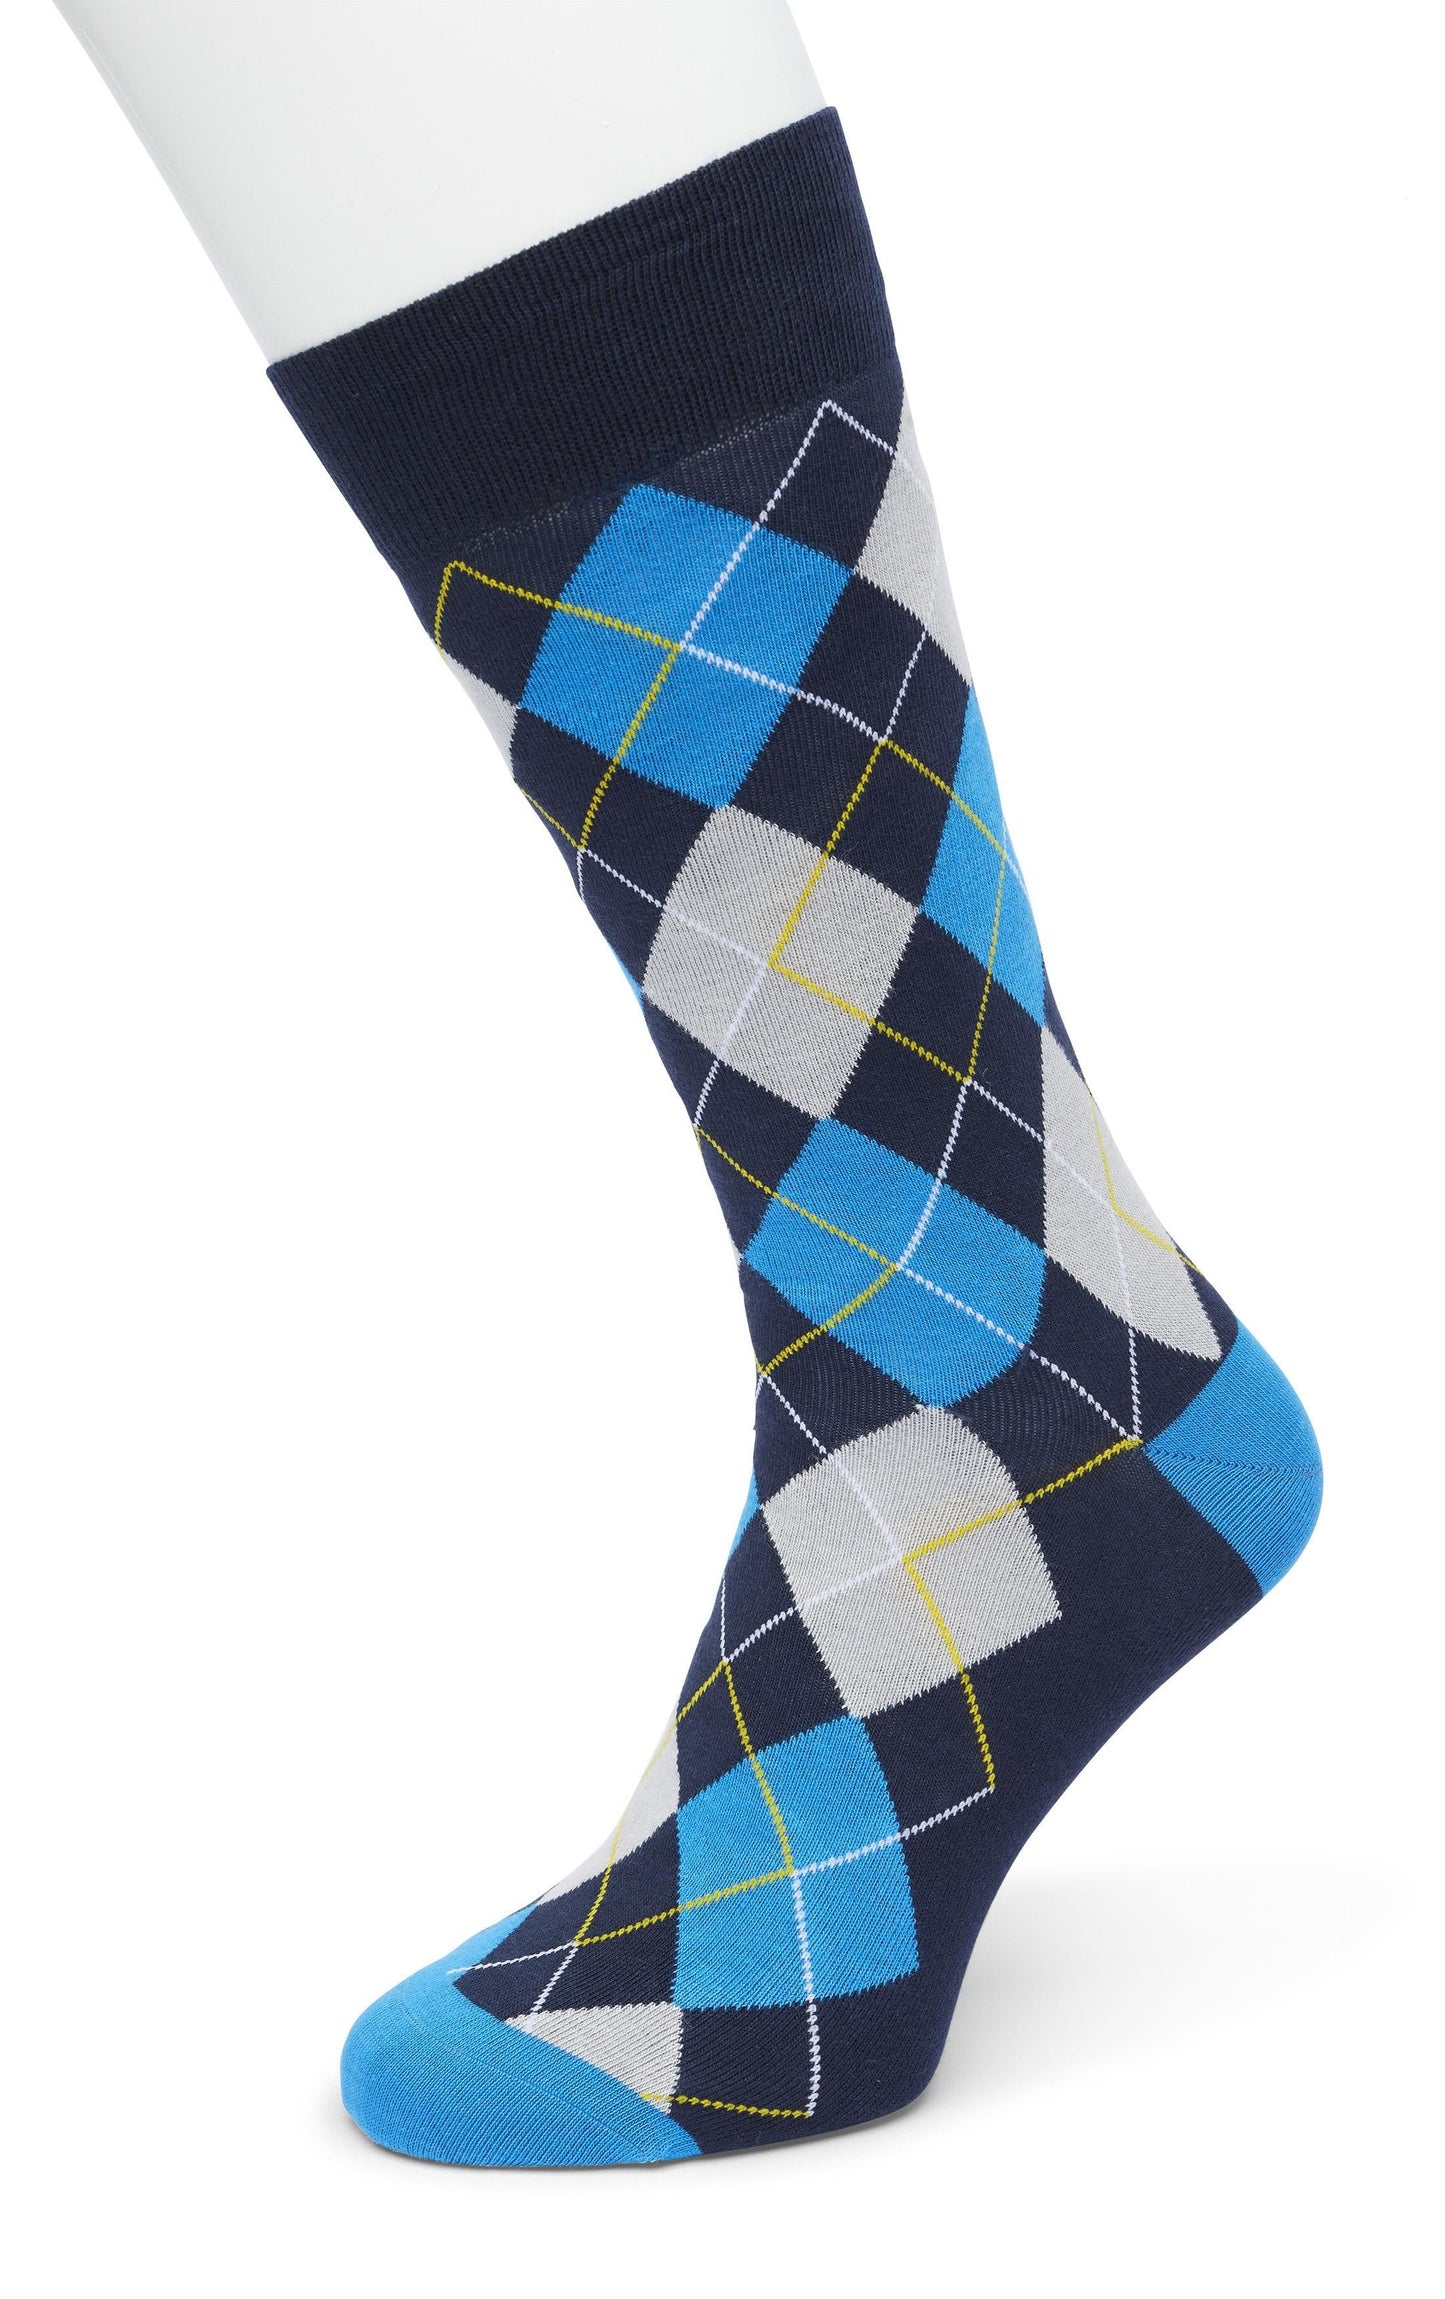 Bonnie Doon BP211122 Argyle Sock - Bright blue, navy and grey cotton ankle socks with a golf style diamond argyle tartan check pattern.